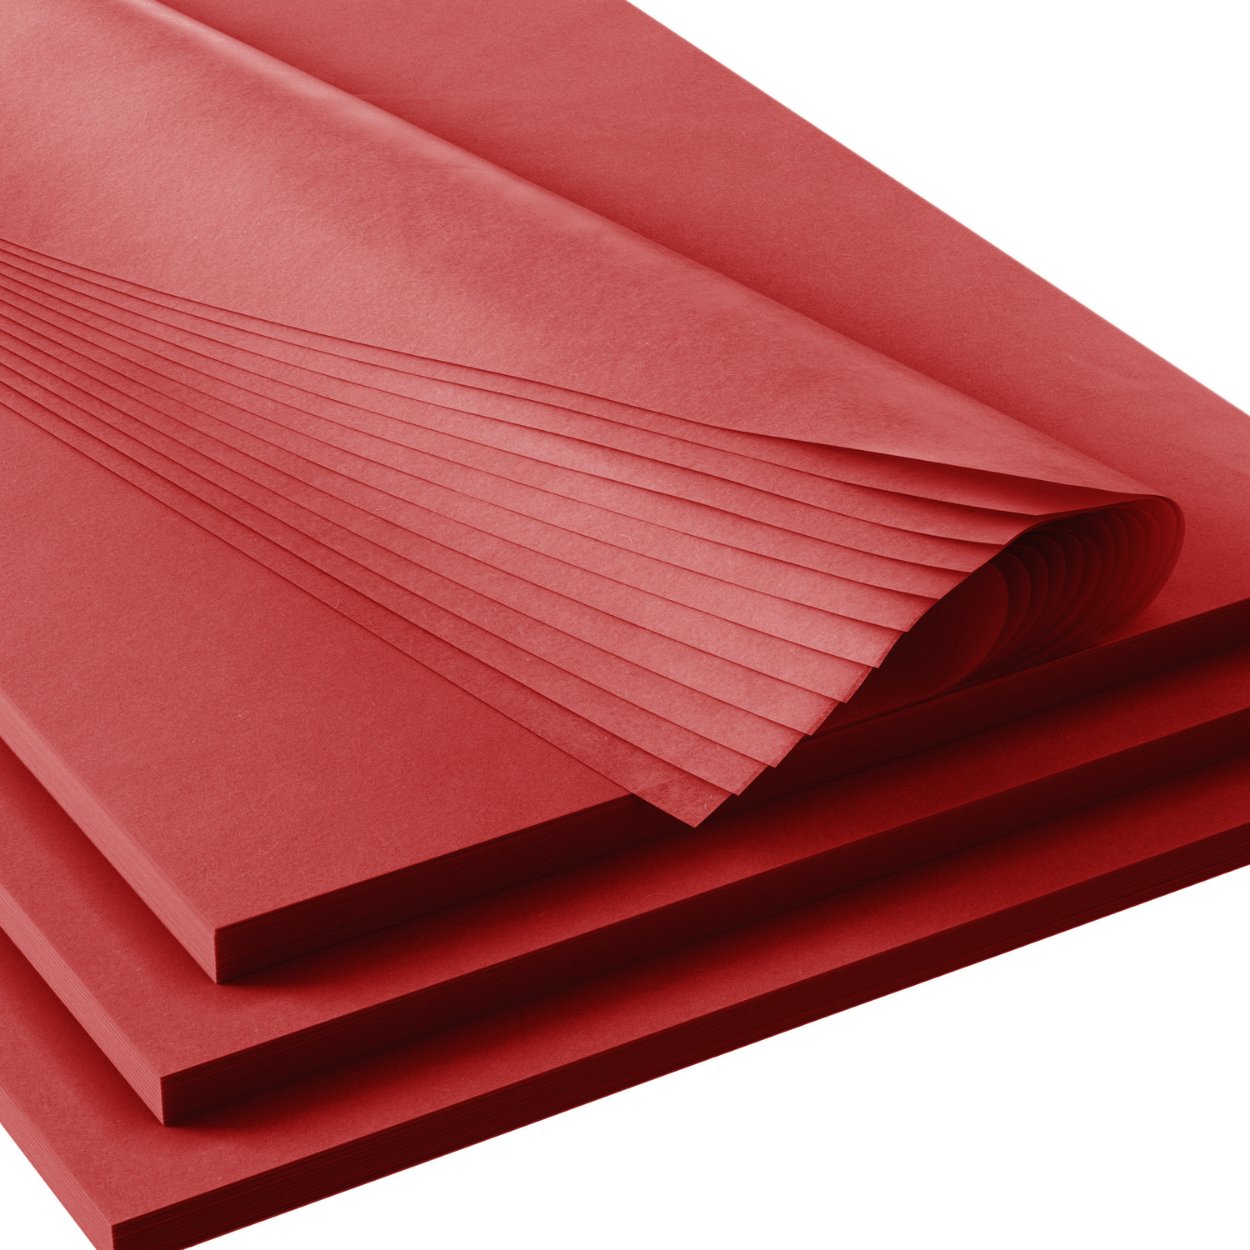 Red Buffalo Plaid Tissue Paper, 20x30, Bulk 240 Sheet Pack